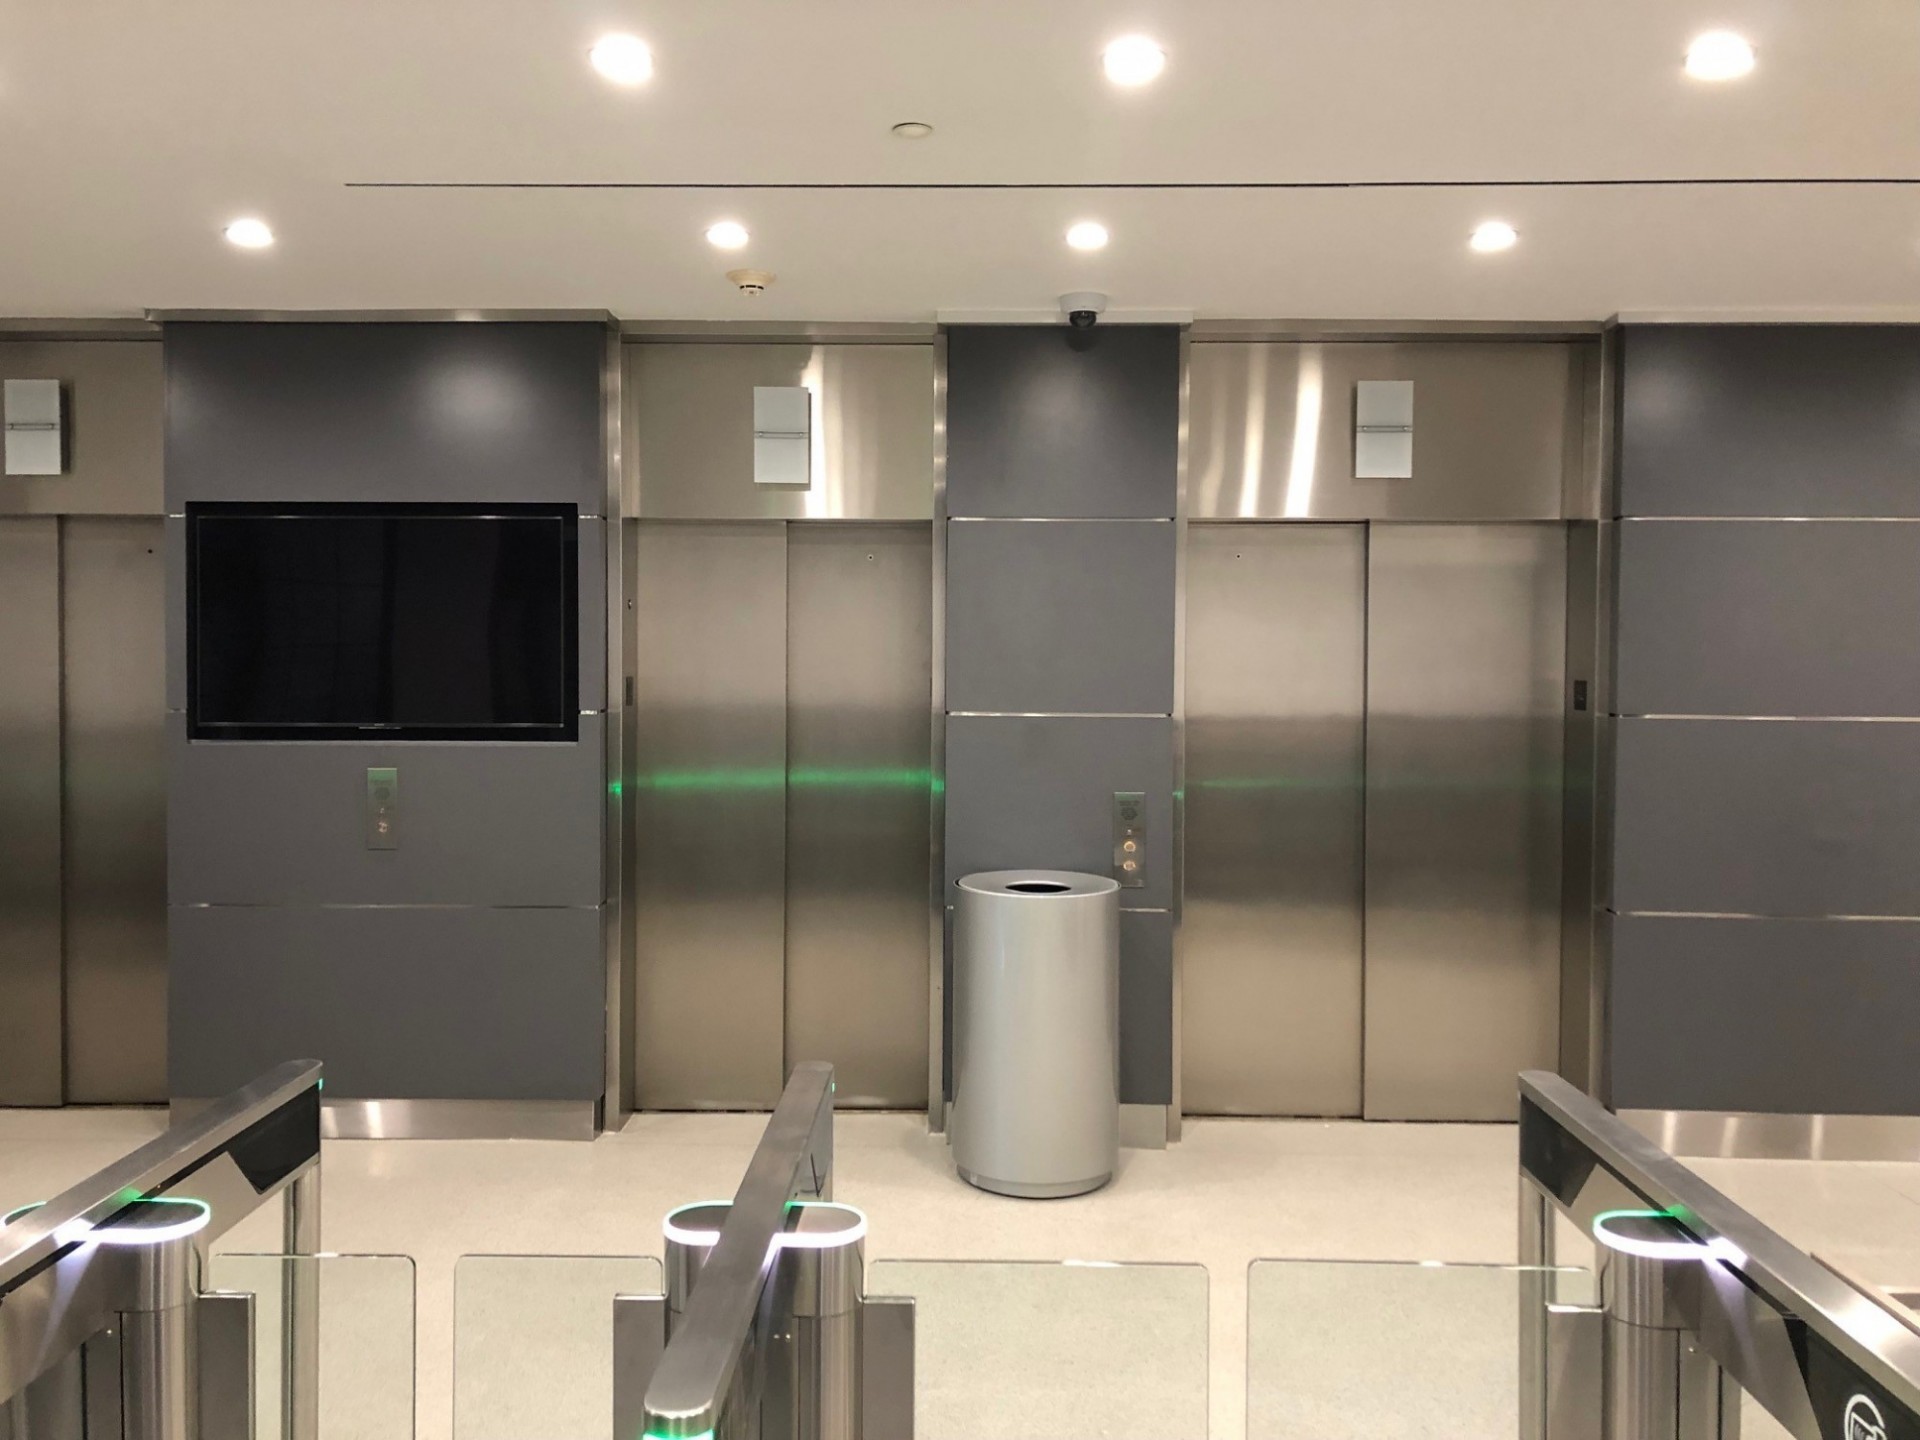 A bank of elevators behind turnstiles